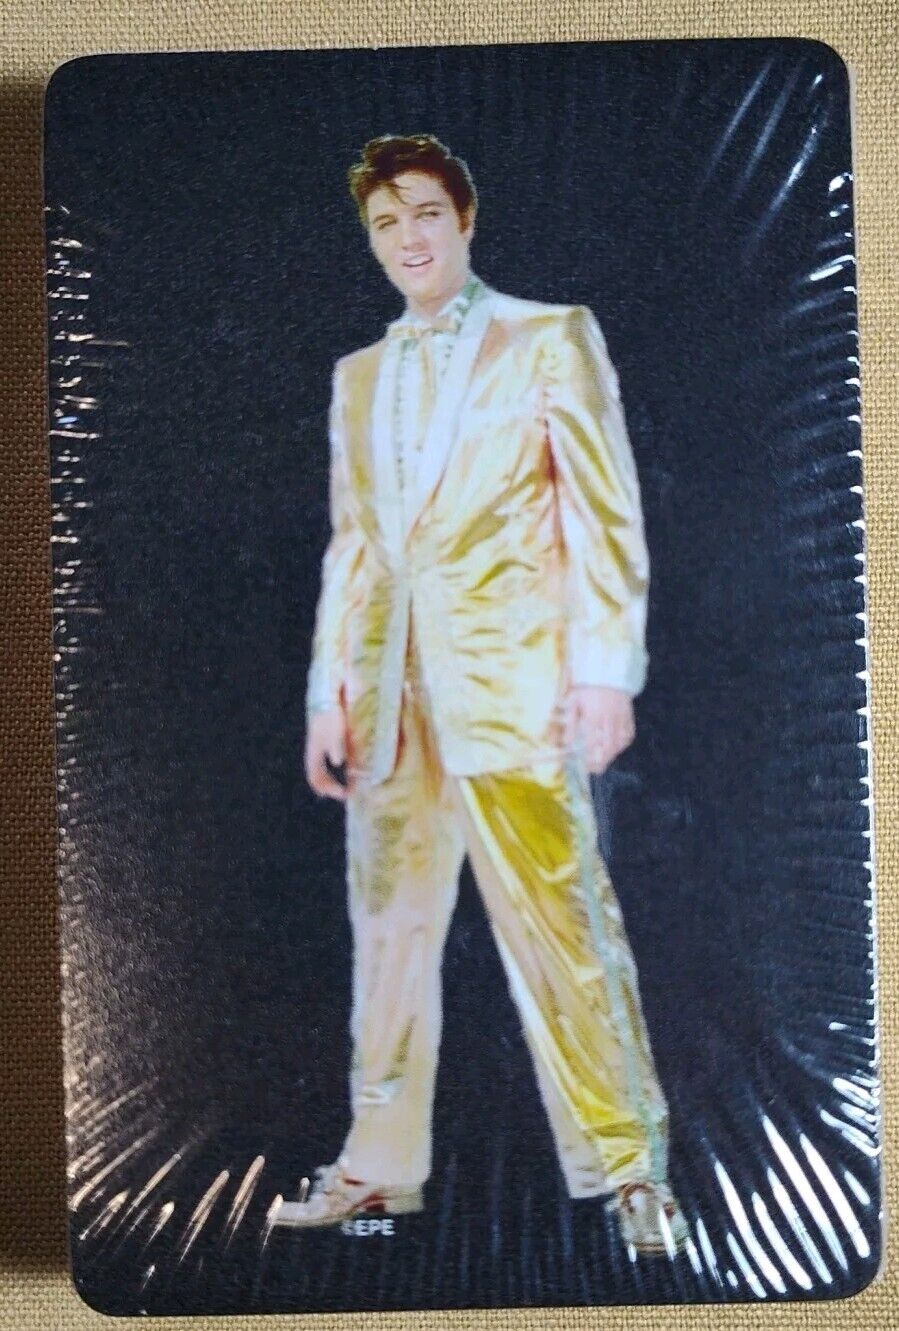 Elvis Presley Regular Deck Playing Cards Still in Original Shrink Wrap / NOS